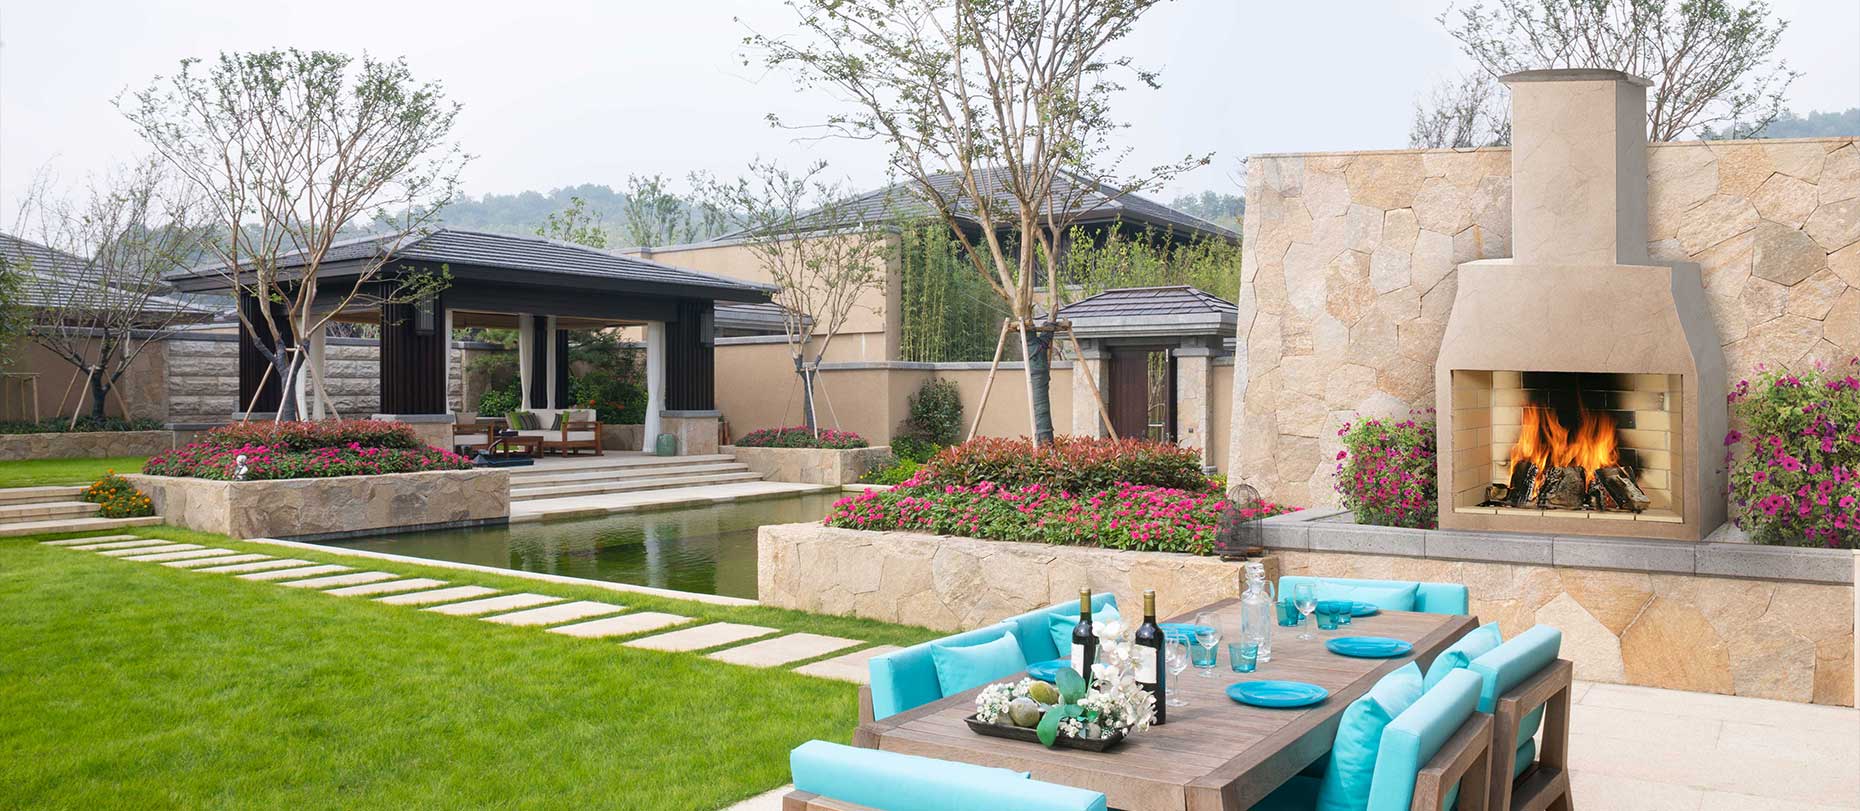 Free Garden Fireplace for the Best Garden Landscape Design.